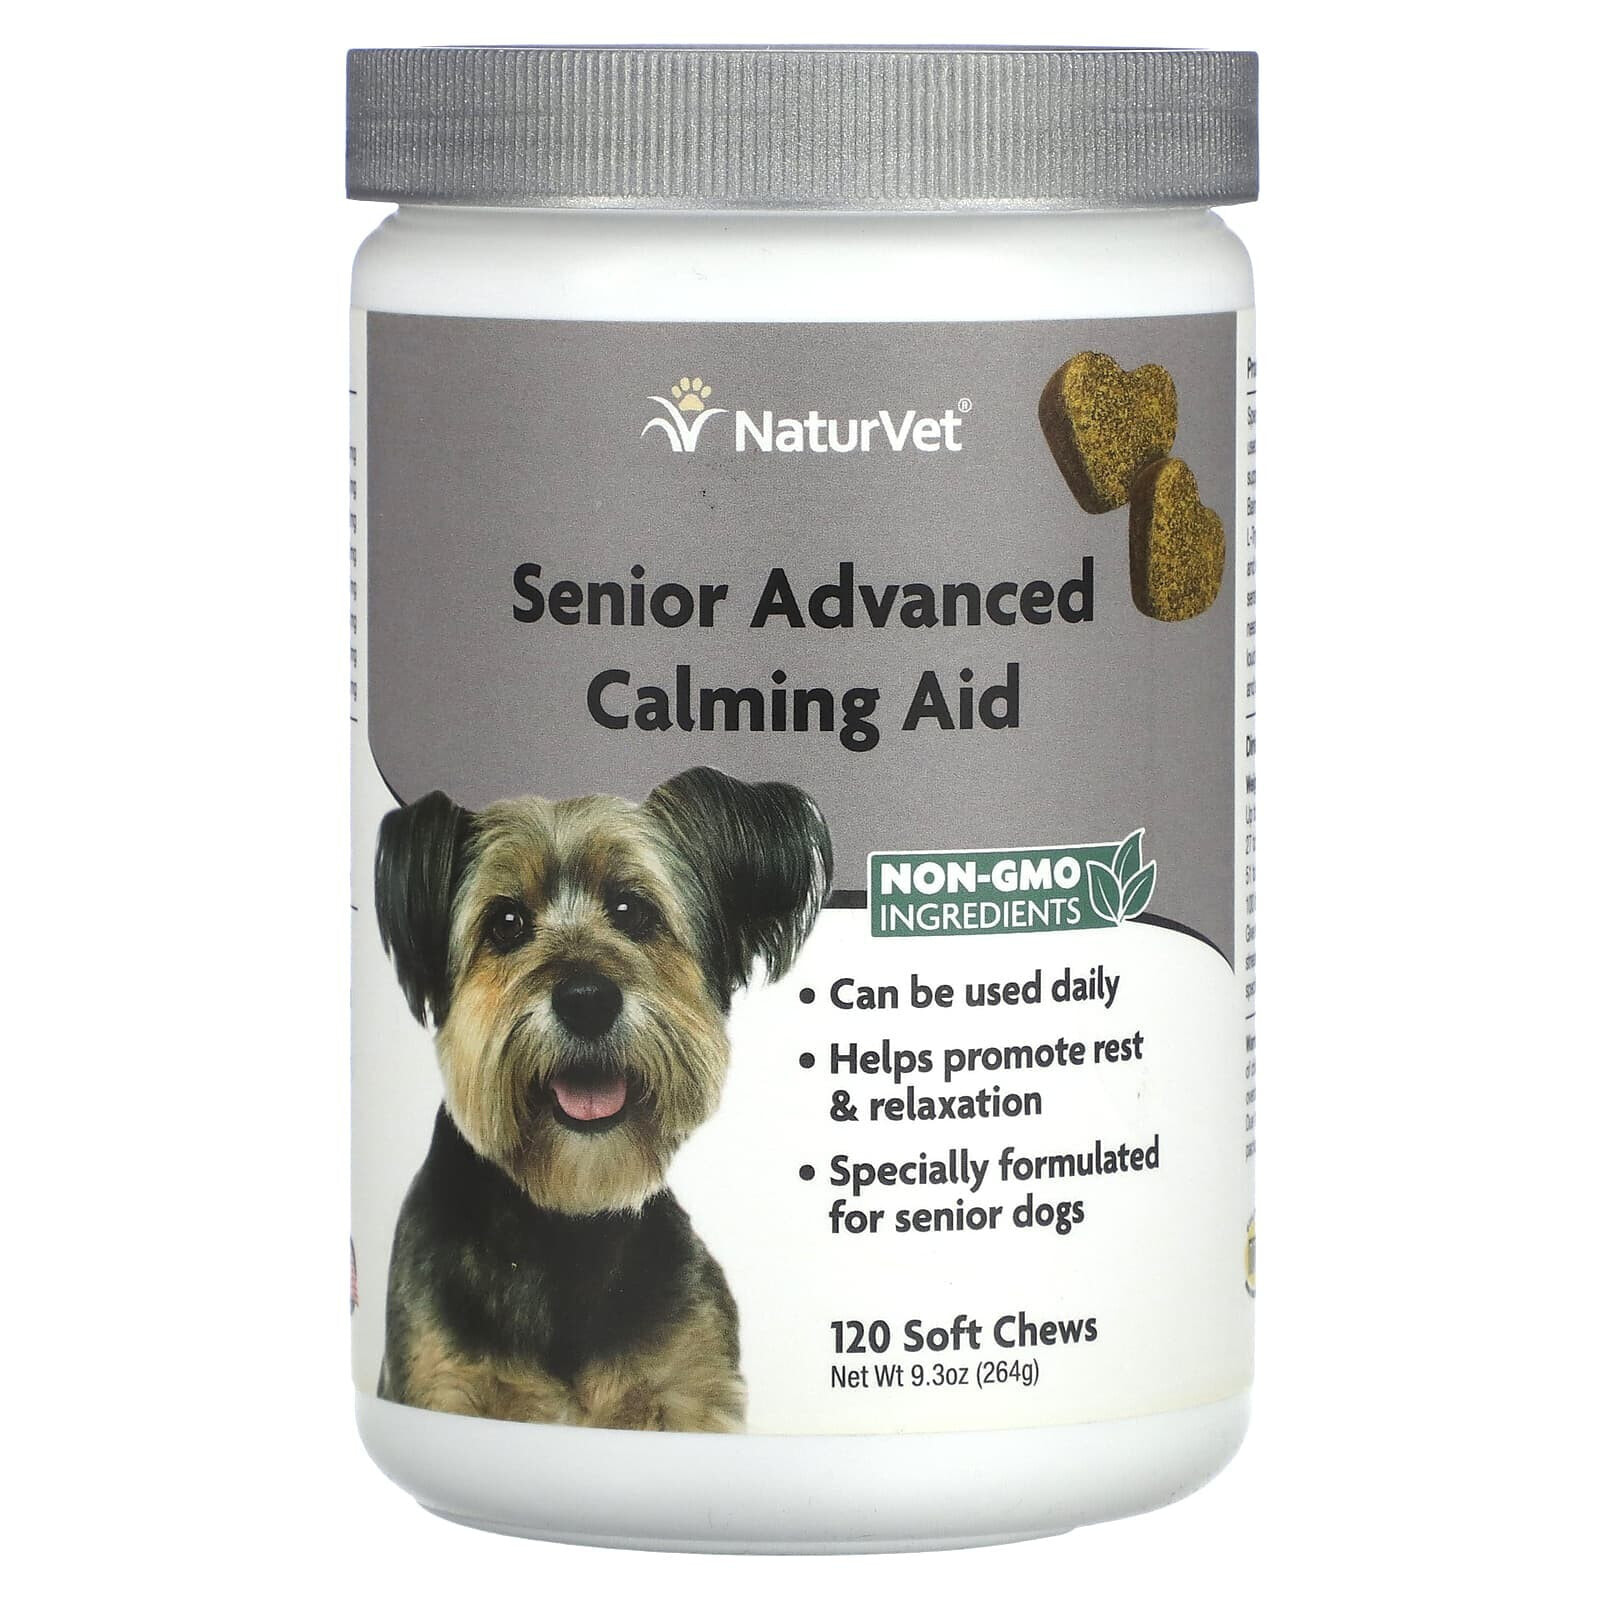 Senior Advanced Calming Aid, For Dogs, 120 Soft Chews, 9.3 oz (264 g)